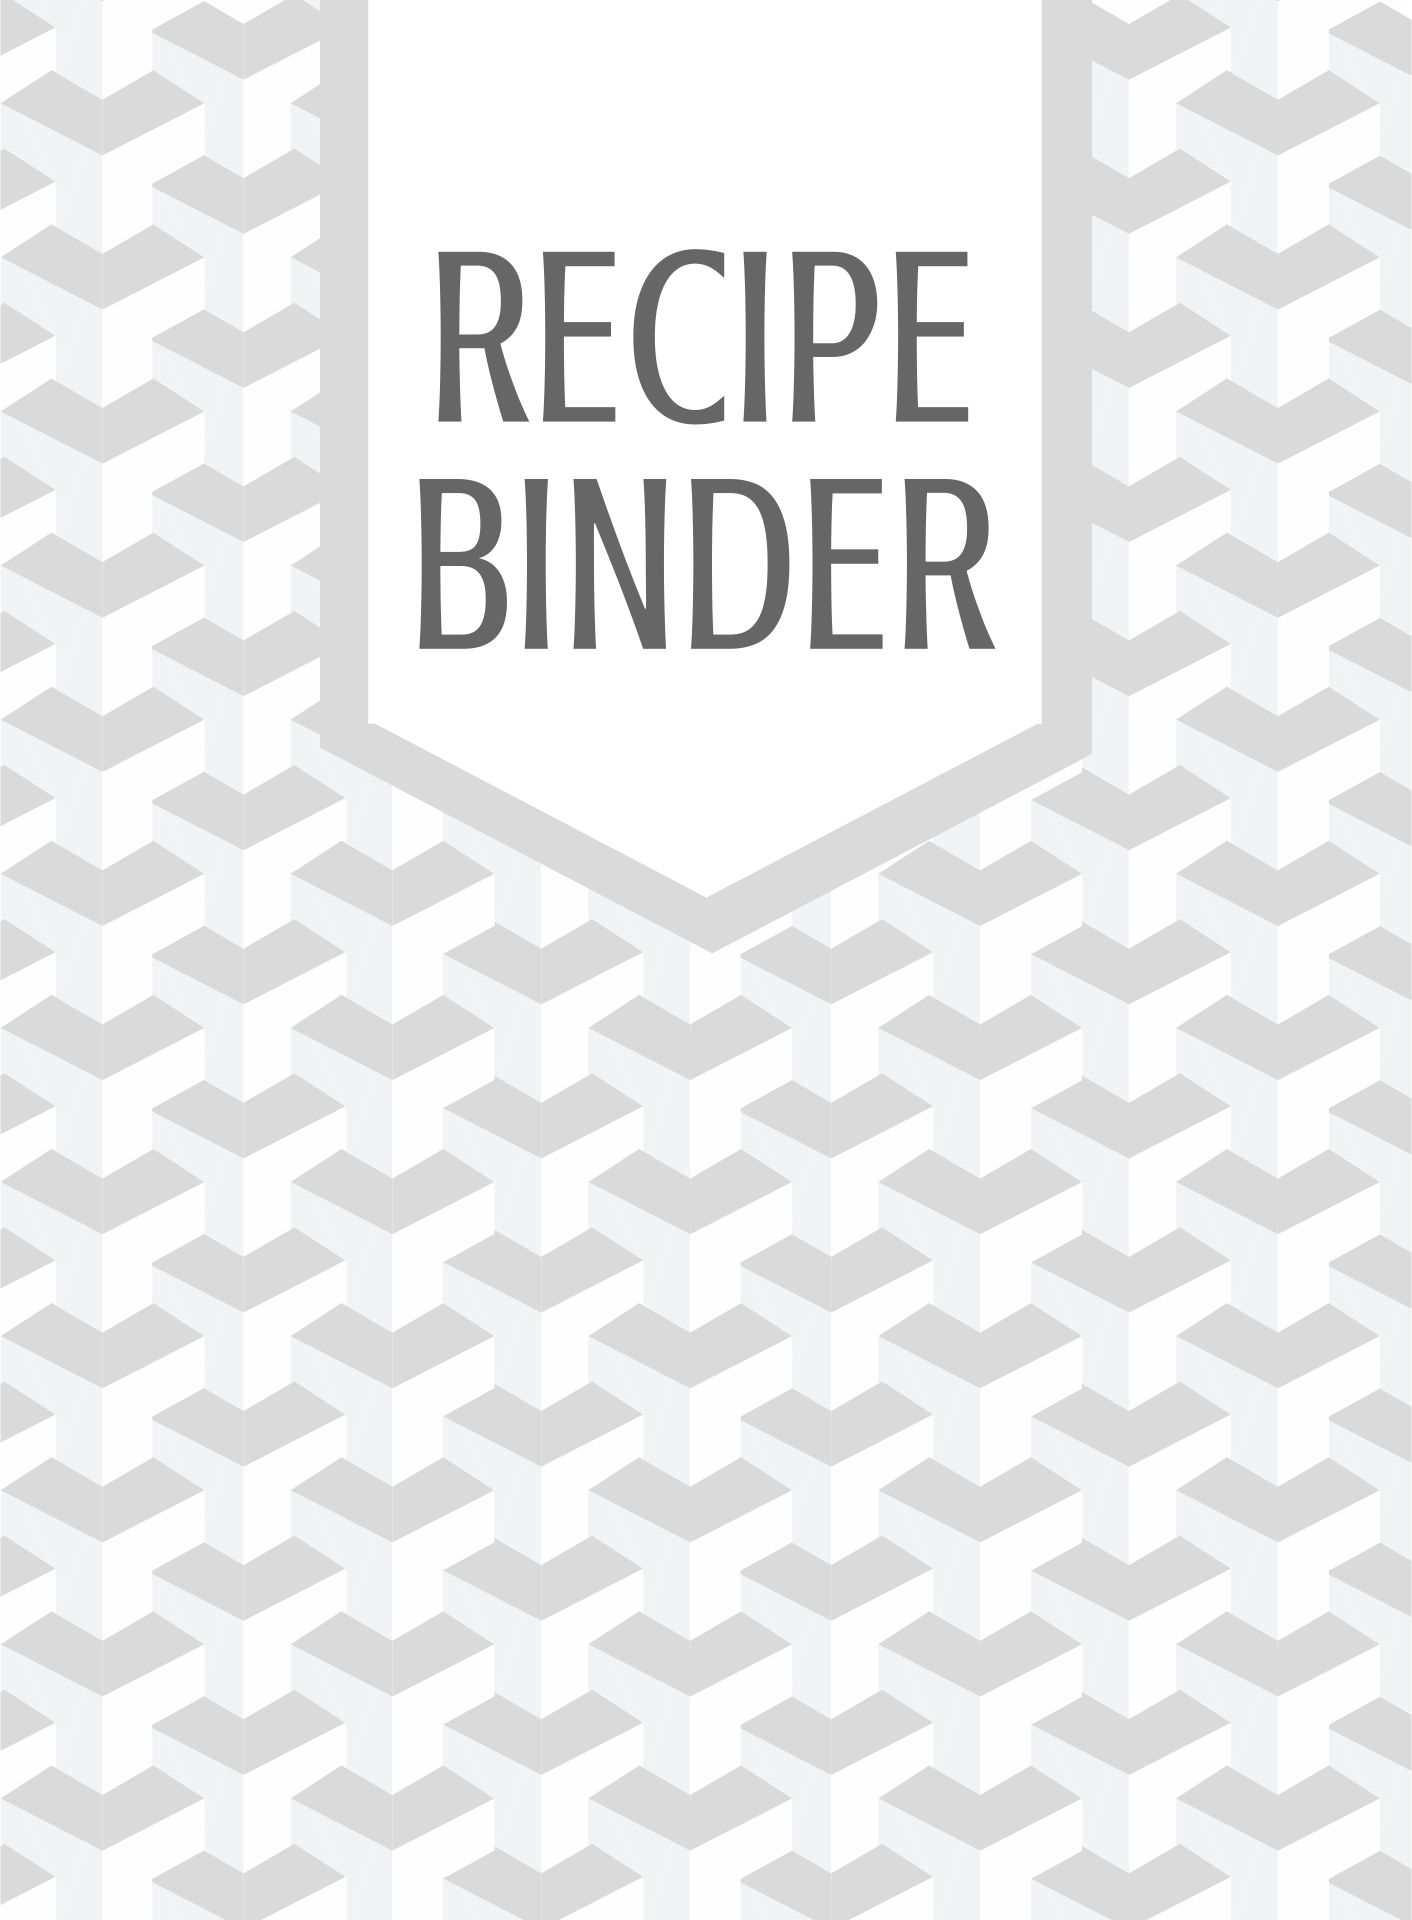 free-printable-recipe-binder-template-printable-templates